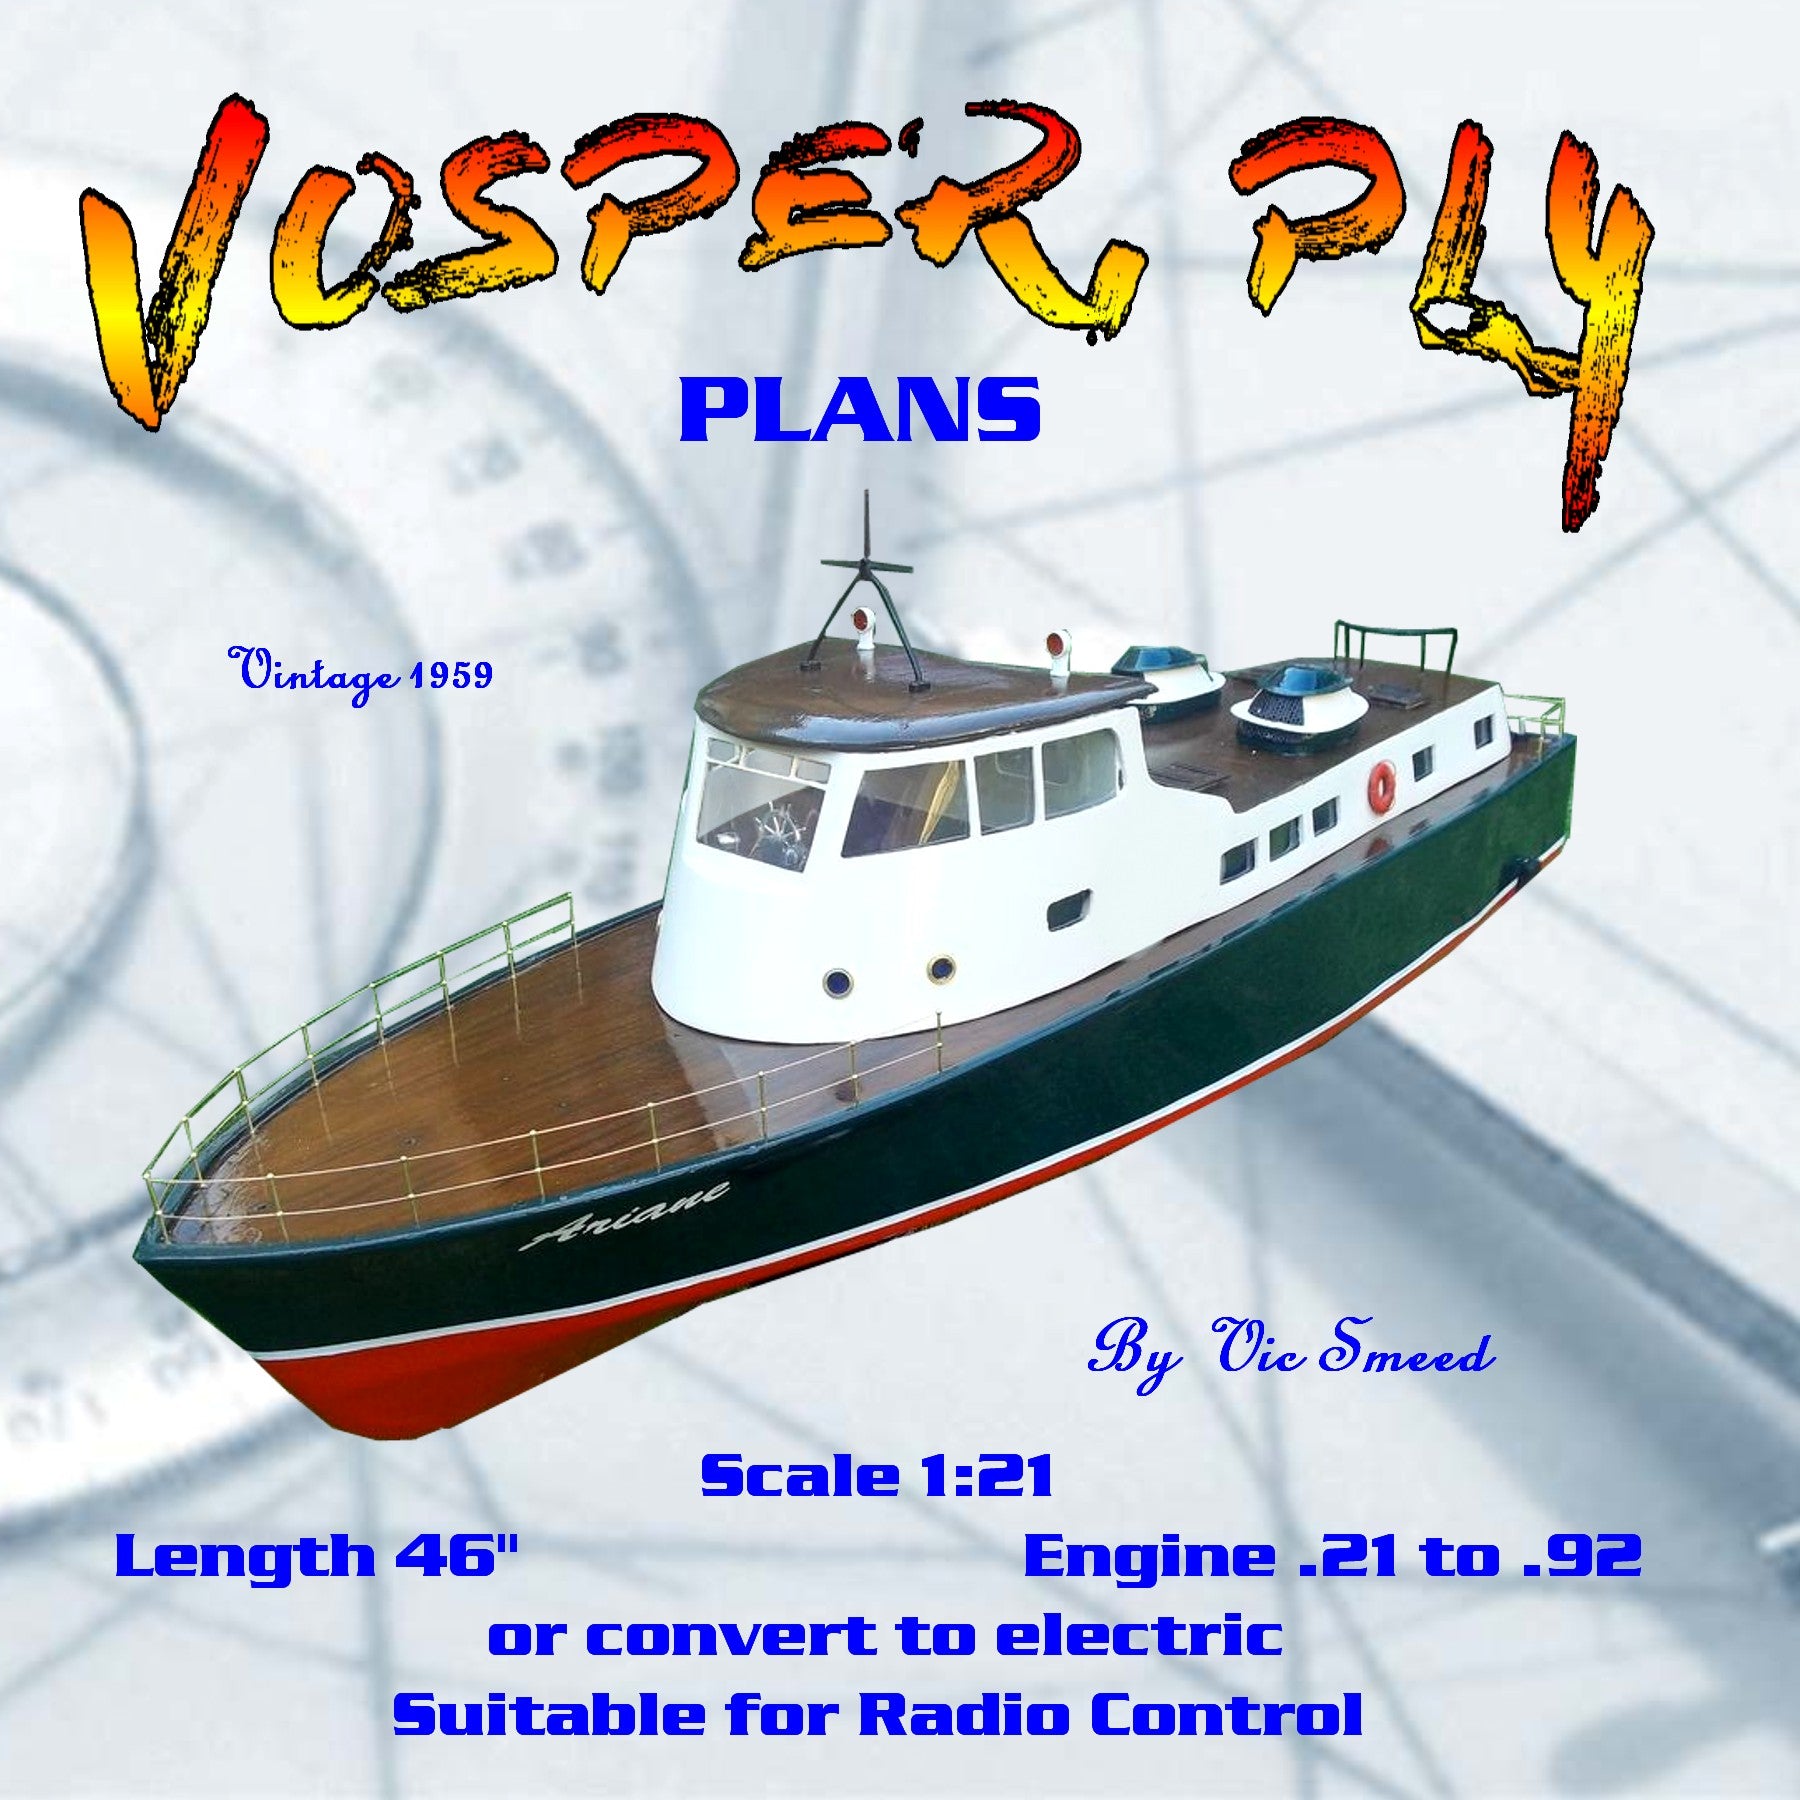 full size printed plan vintage 1959 scale 1:21 80 ft. personnel launch "vosper, pl4